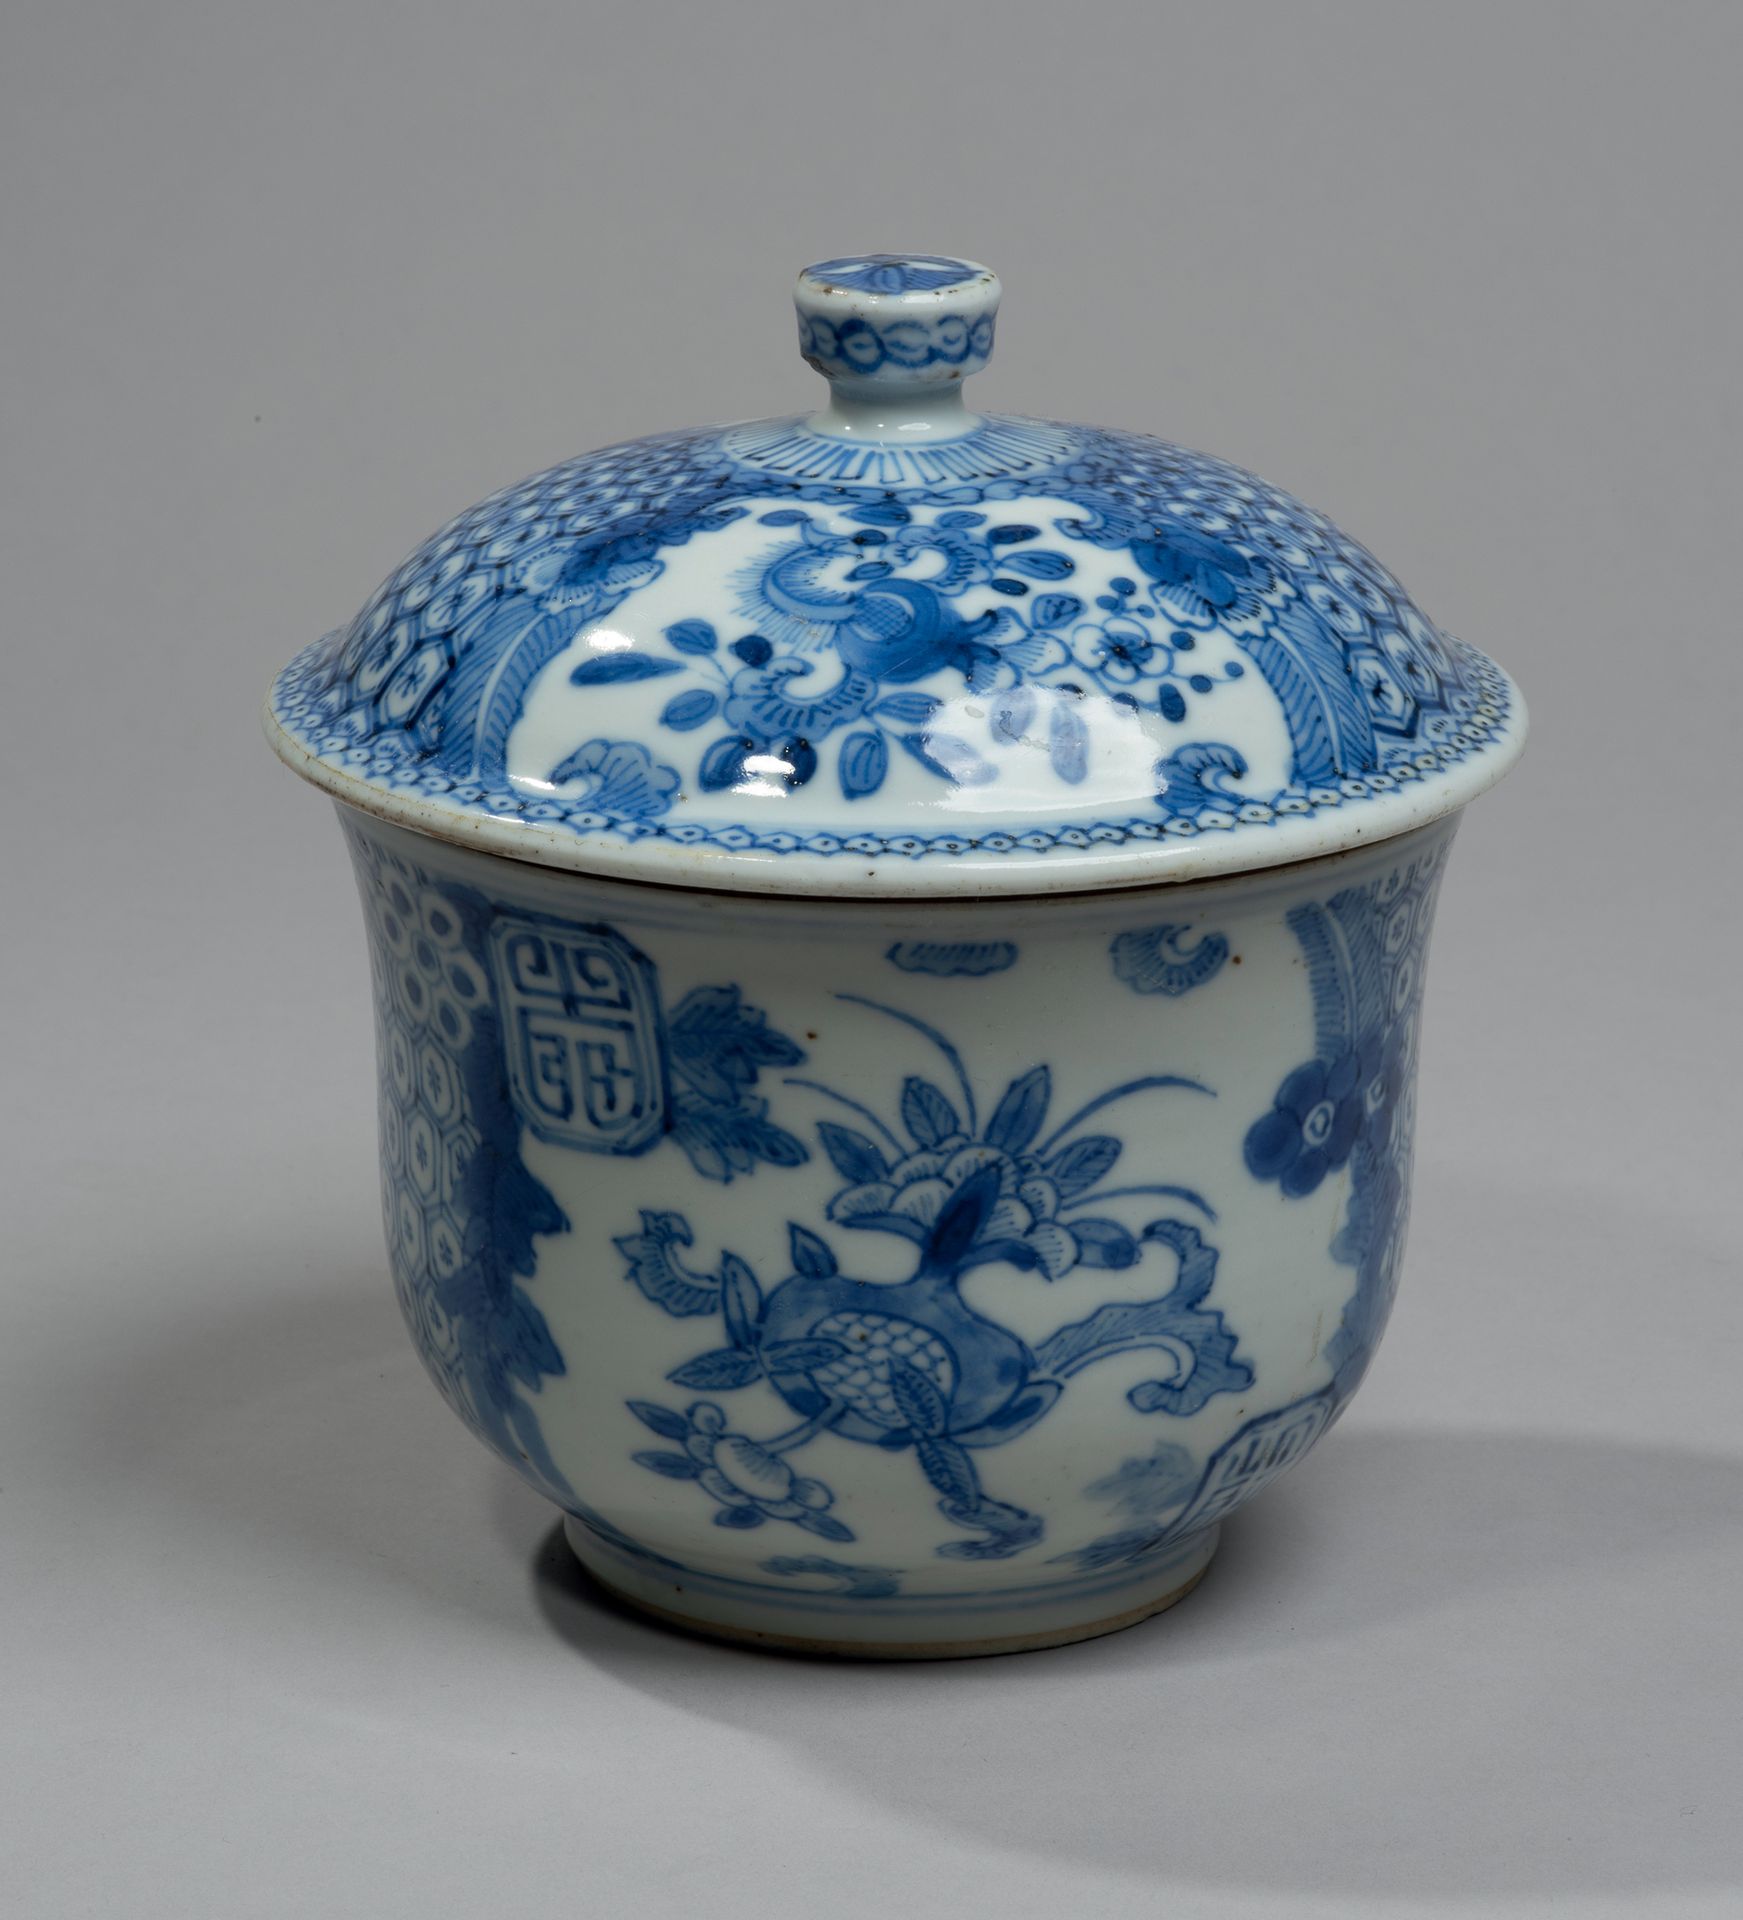 VIETNAM - XIXe siècle -
高15厘米，瓷质盖碗，釉下蓝色装饰有盛开的梅花、石榴和蜂巢图案。